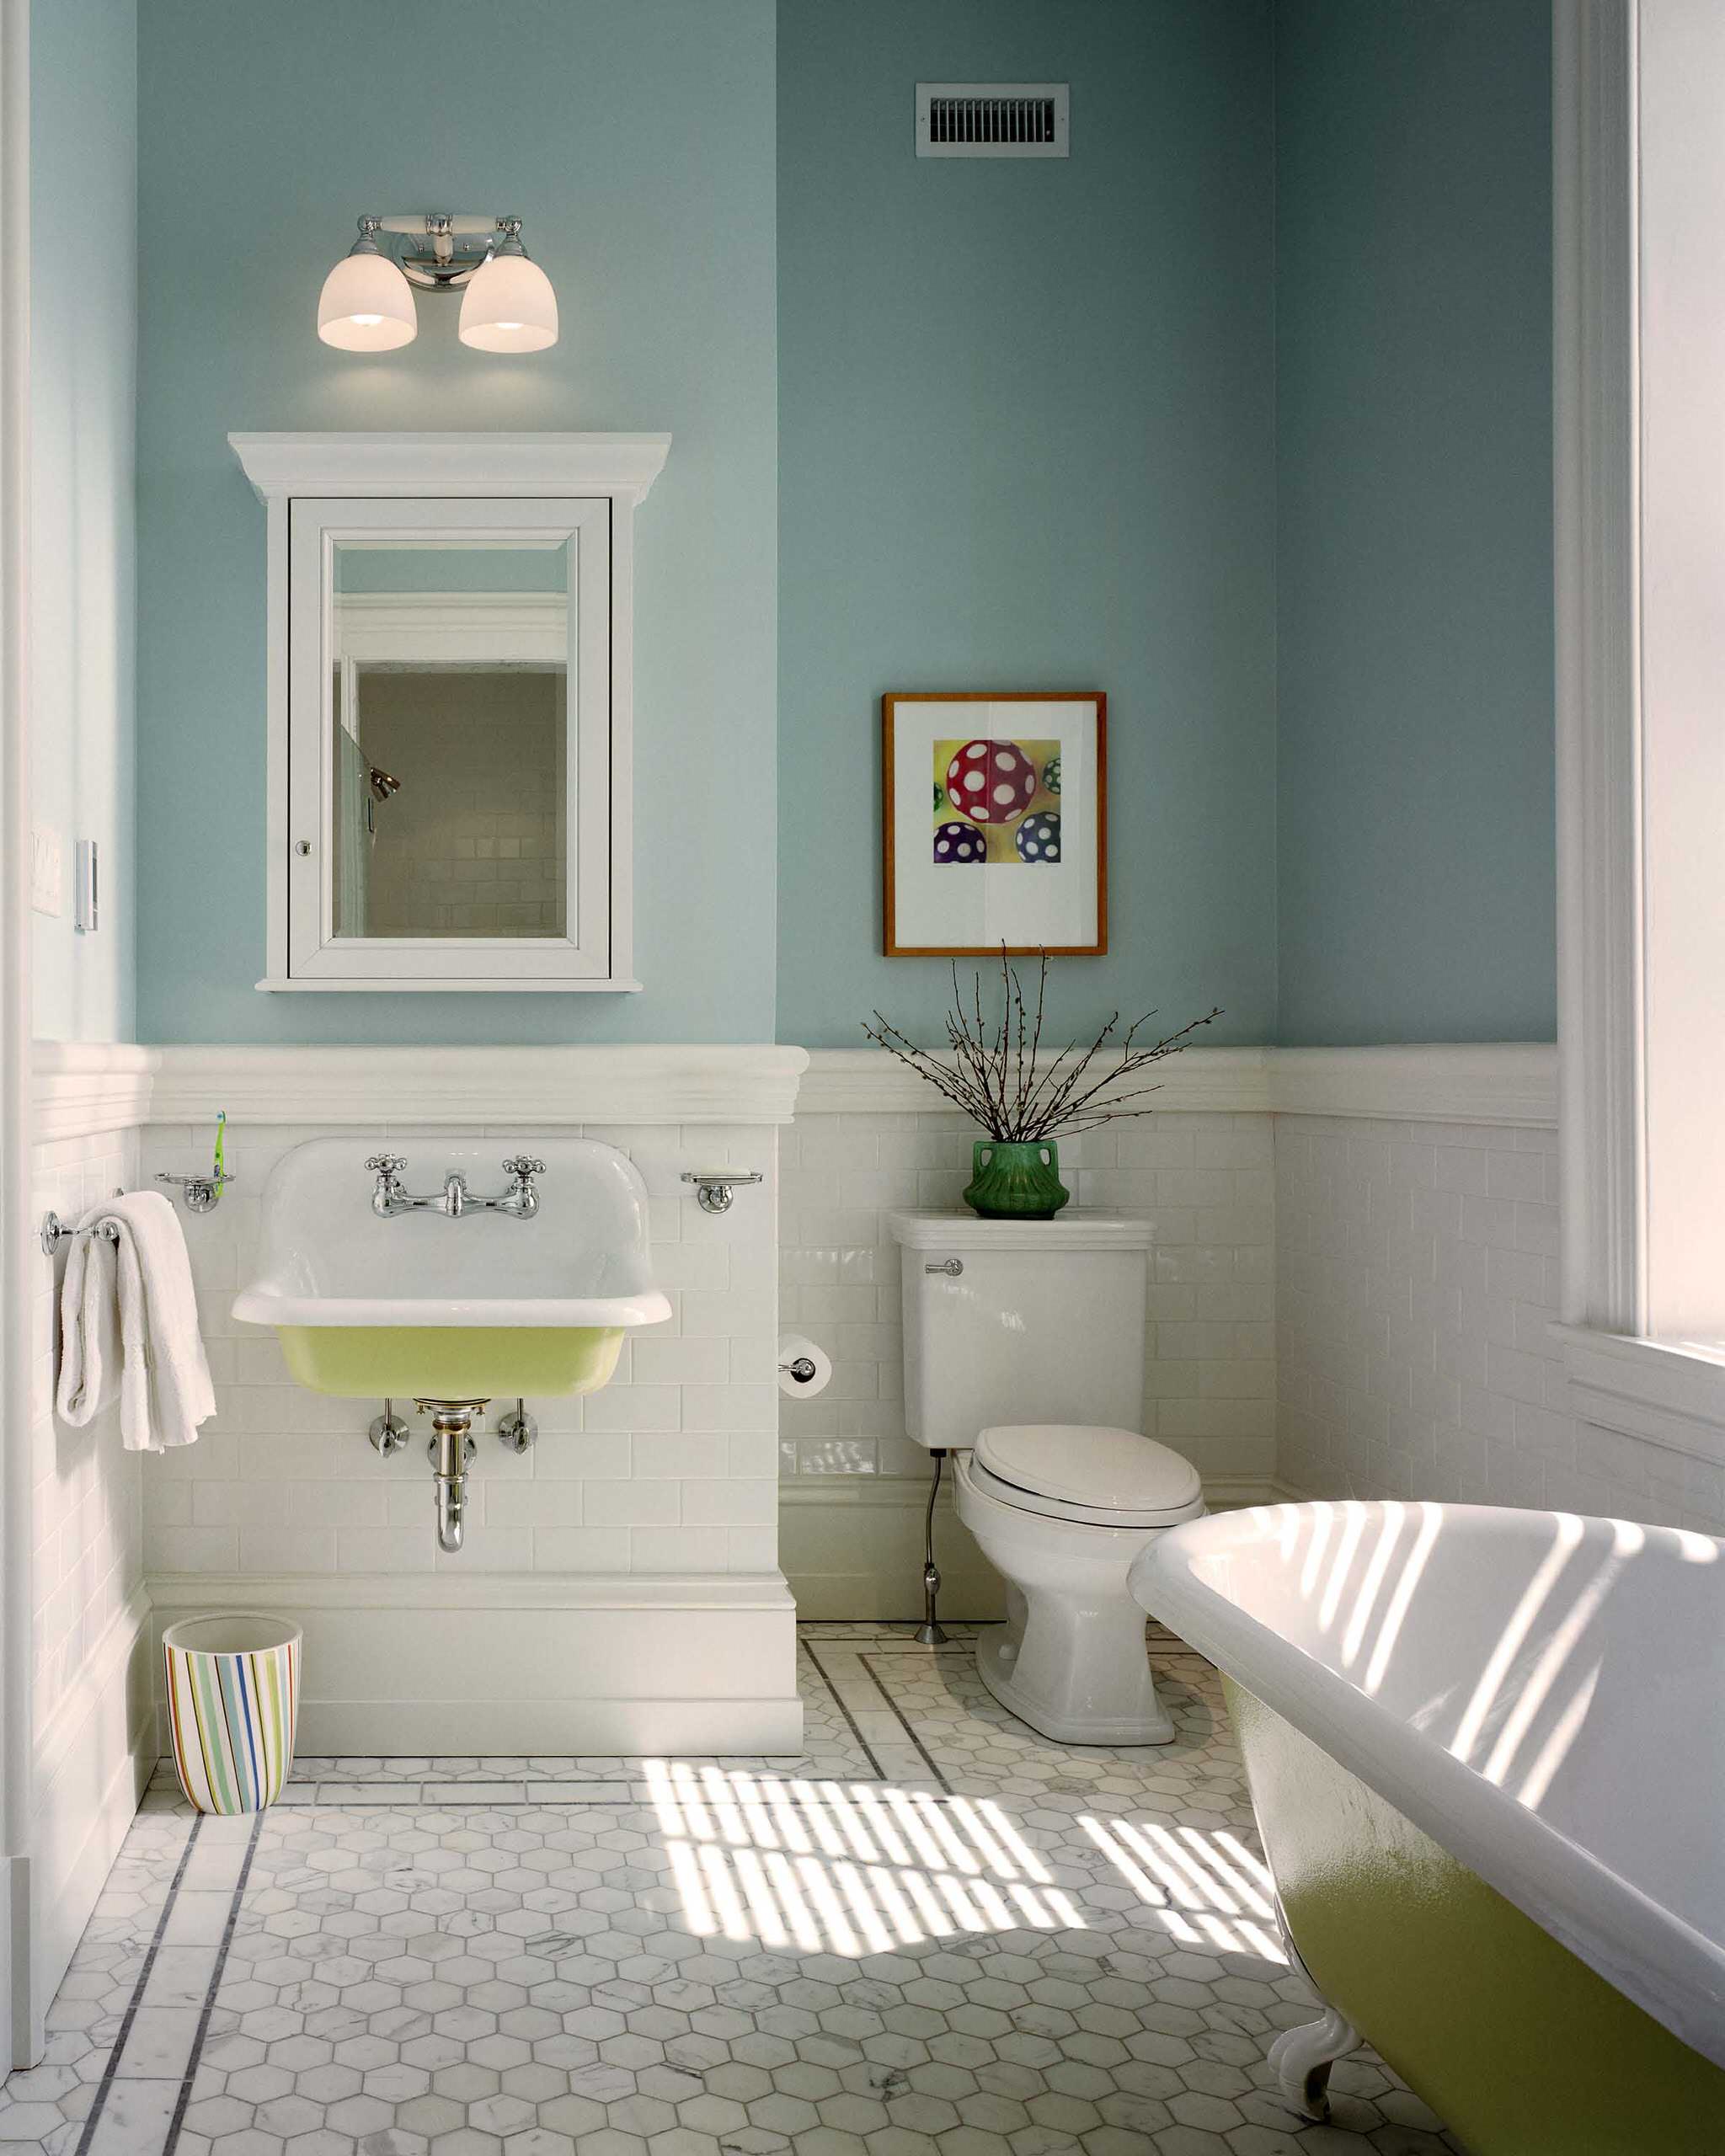 Simple Green, US, Household, Bathroom